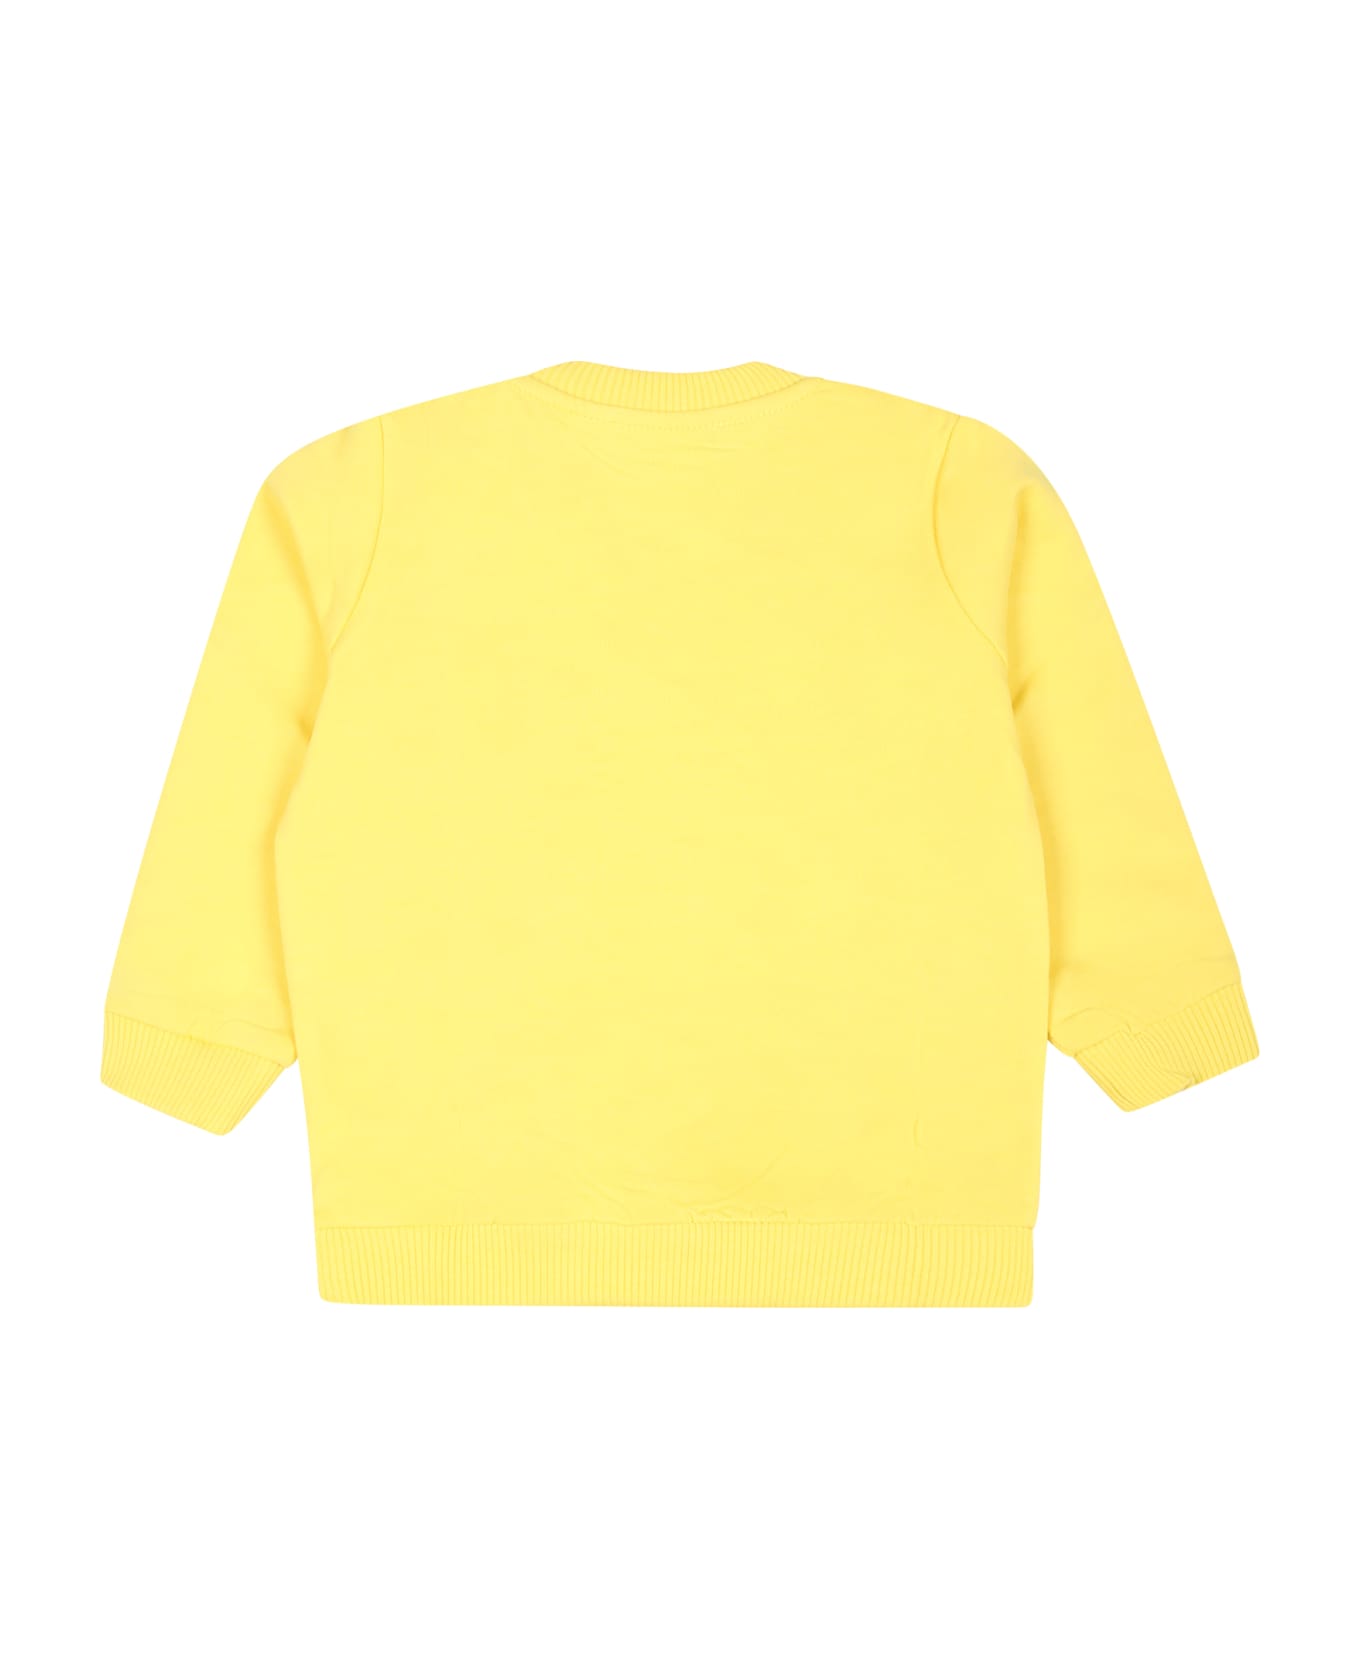 Moschino Yellow Sweatshirt For Babykids With Teddy Bear - Yellow